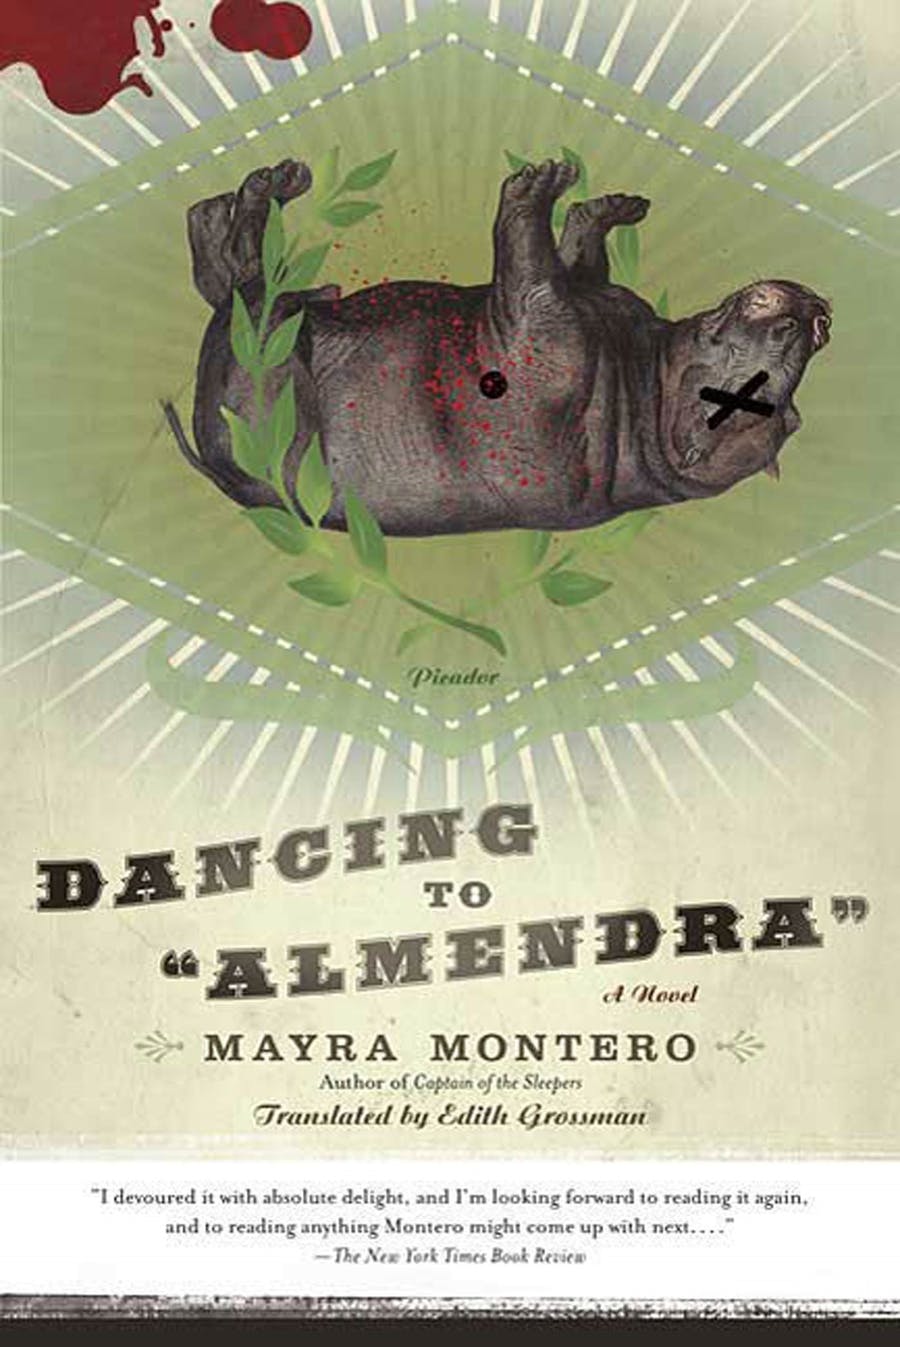 DANCING TO ALMENDRA - Mayra Montero